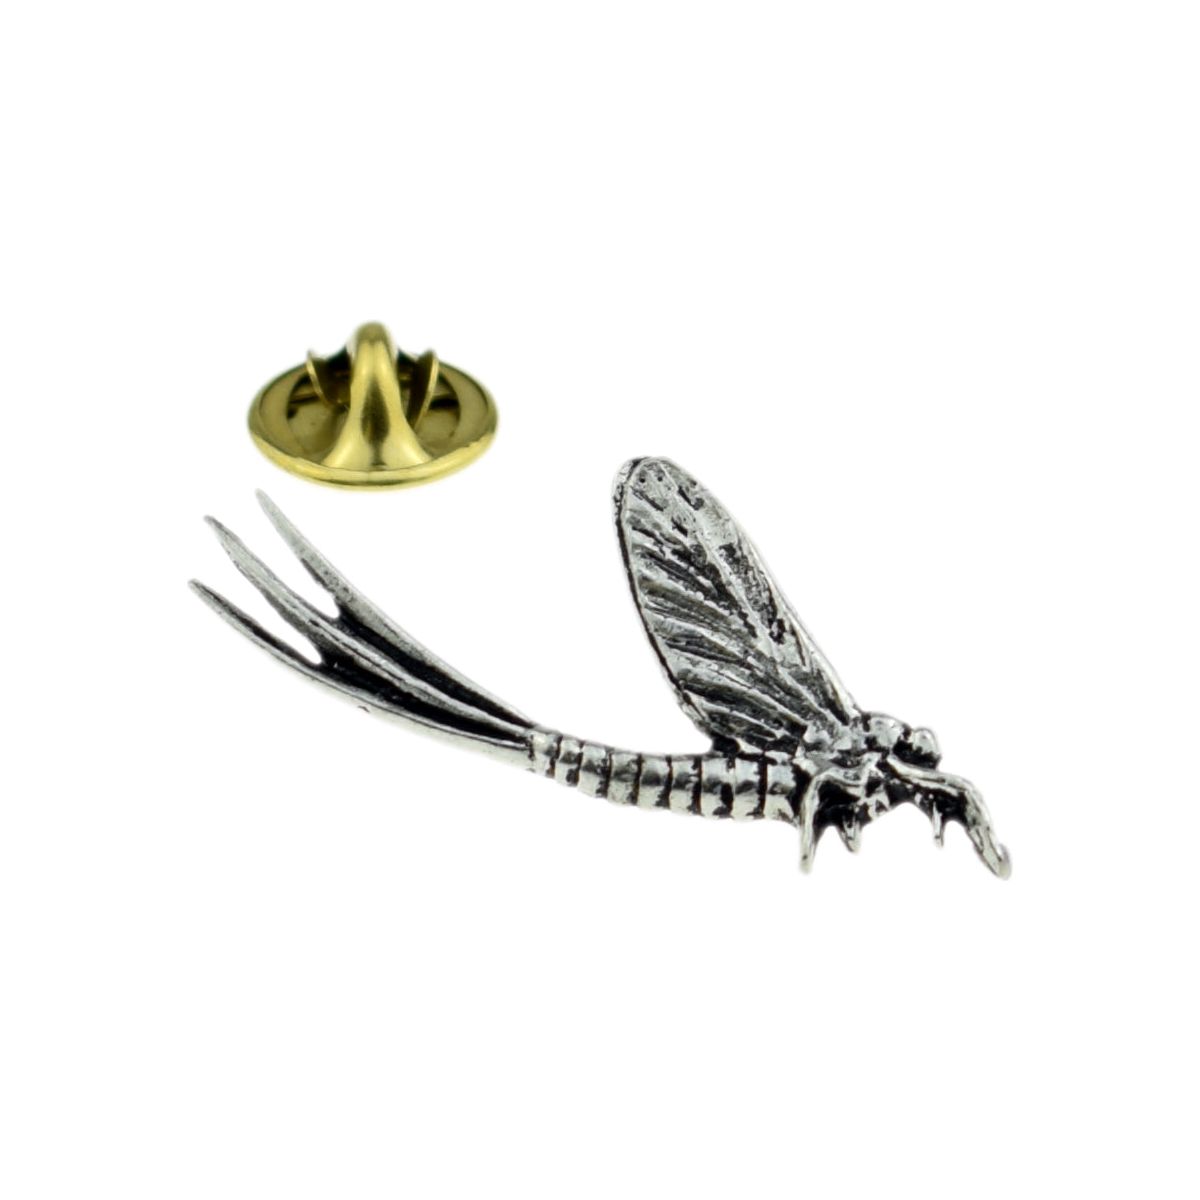 Mayfly English Pewter Lapel Pin Badge - Ashton and Finch